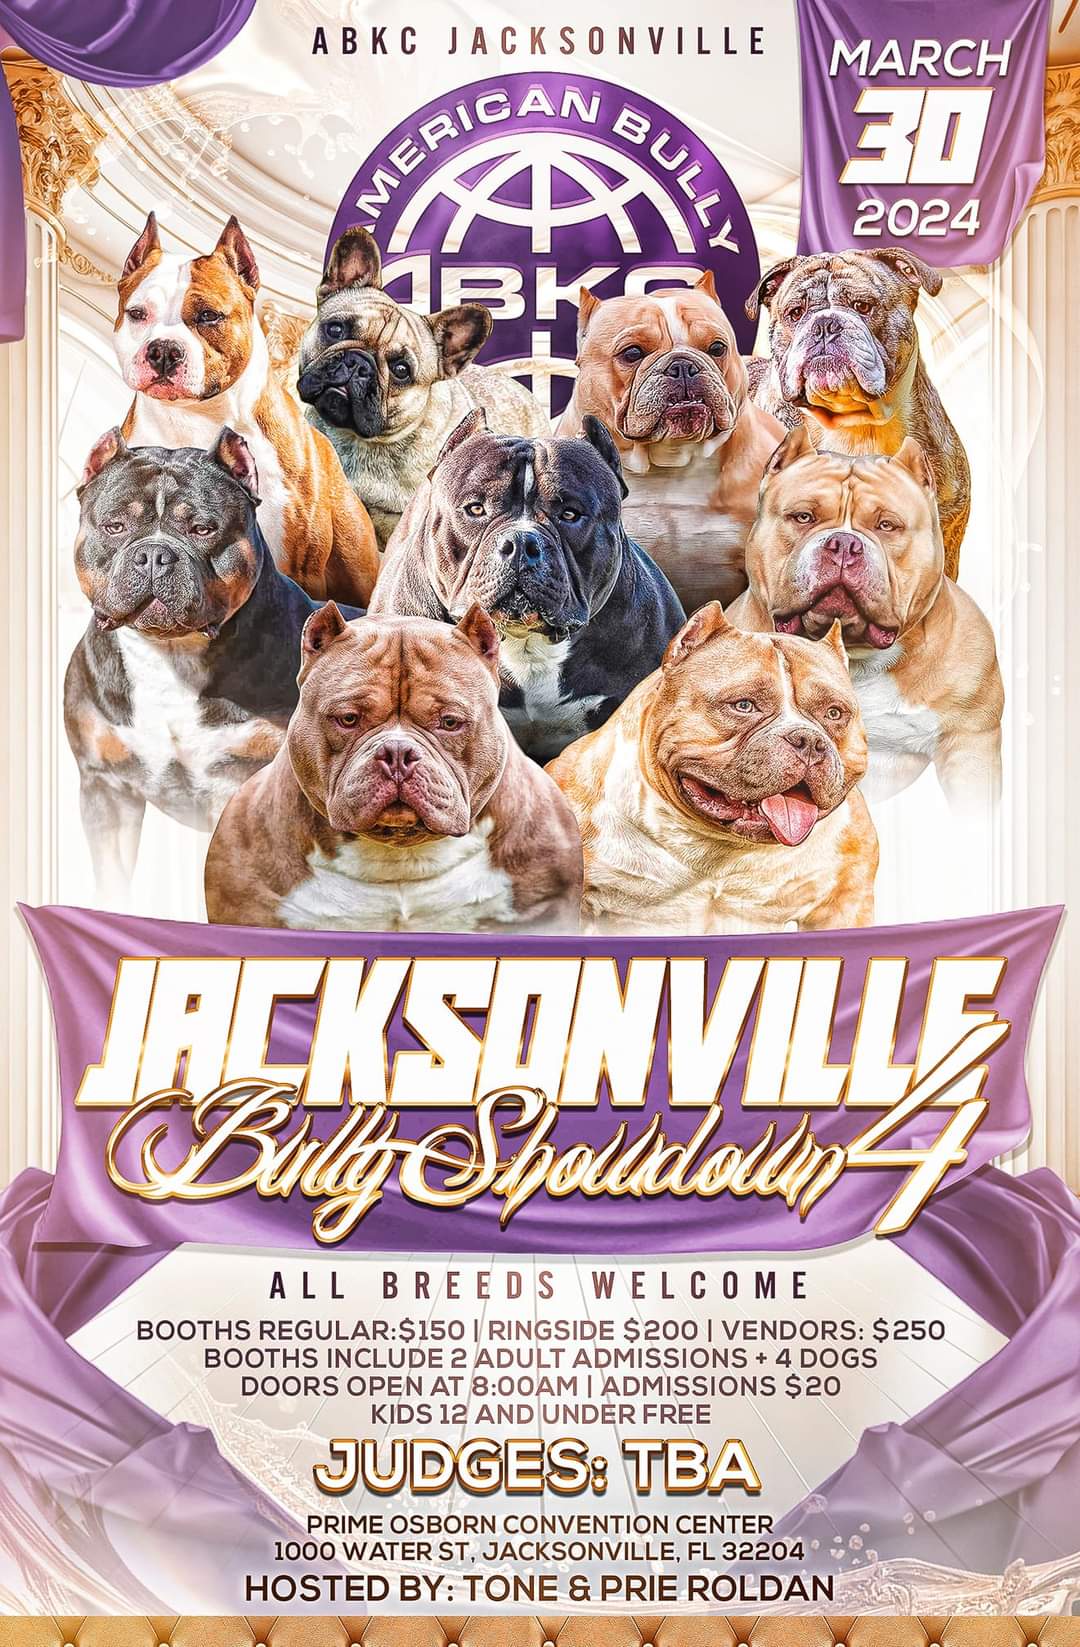 ABKC Jacksonville Bully Showdown III